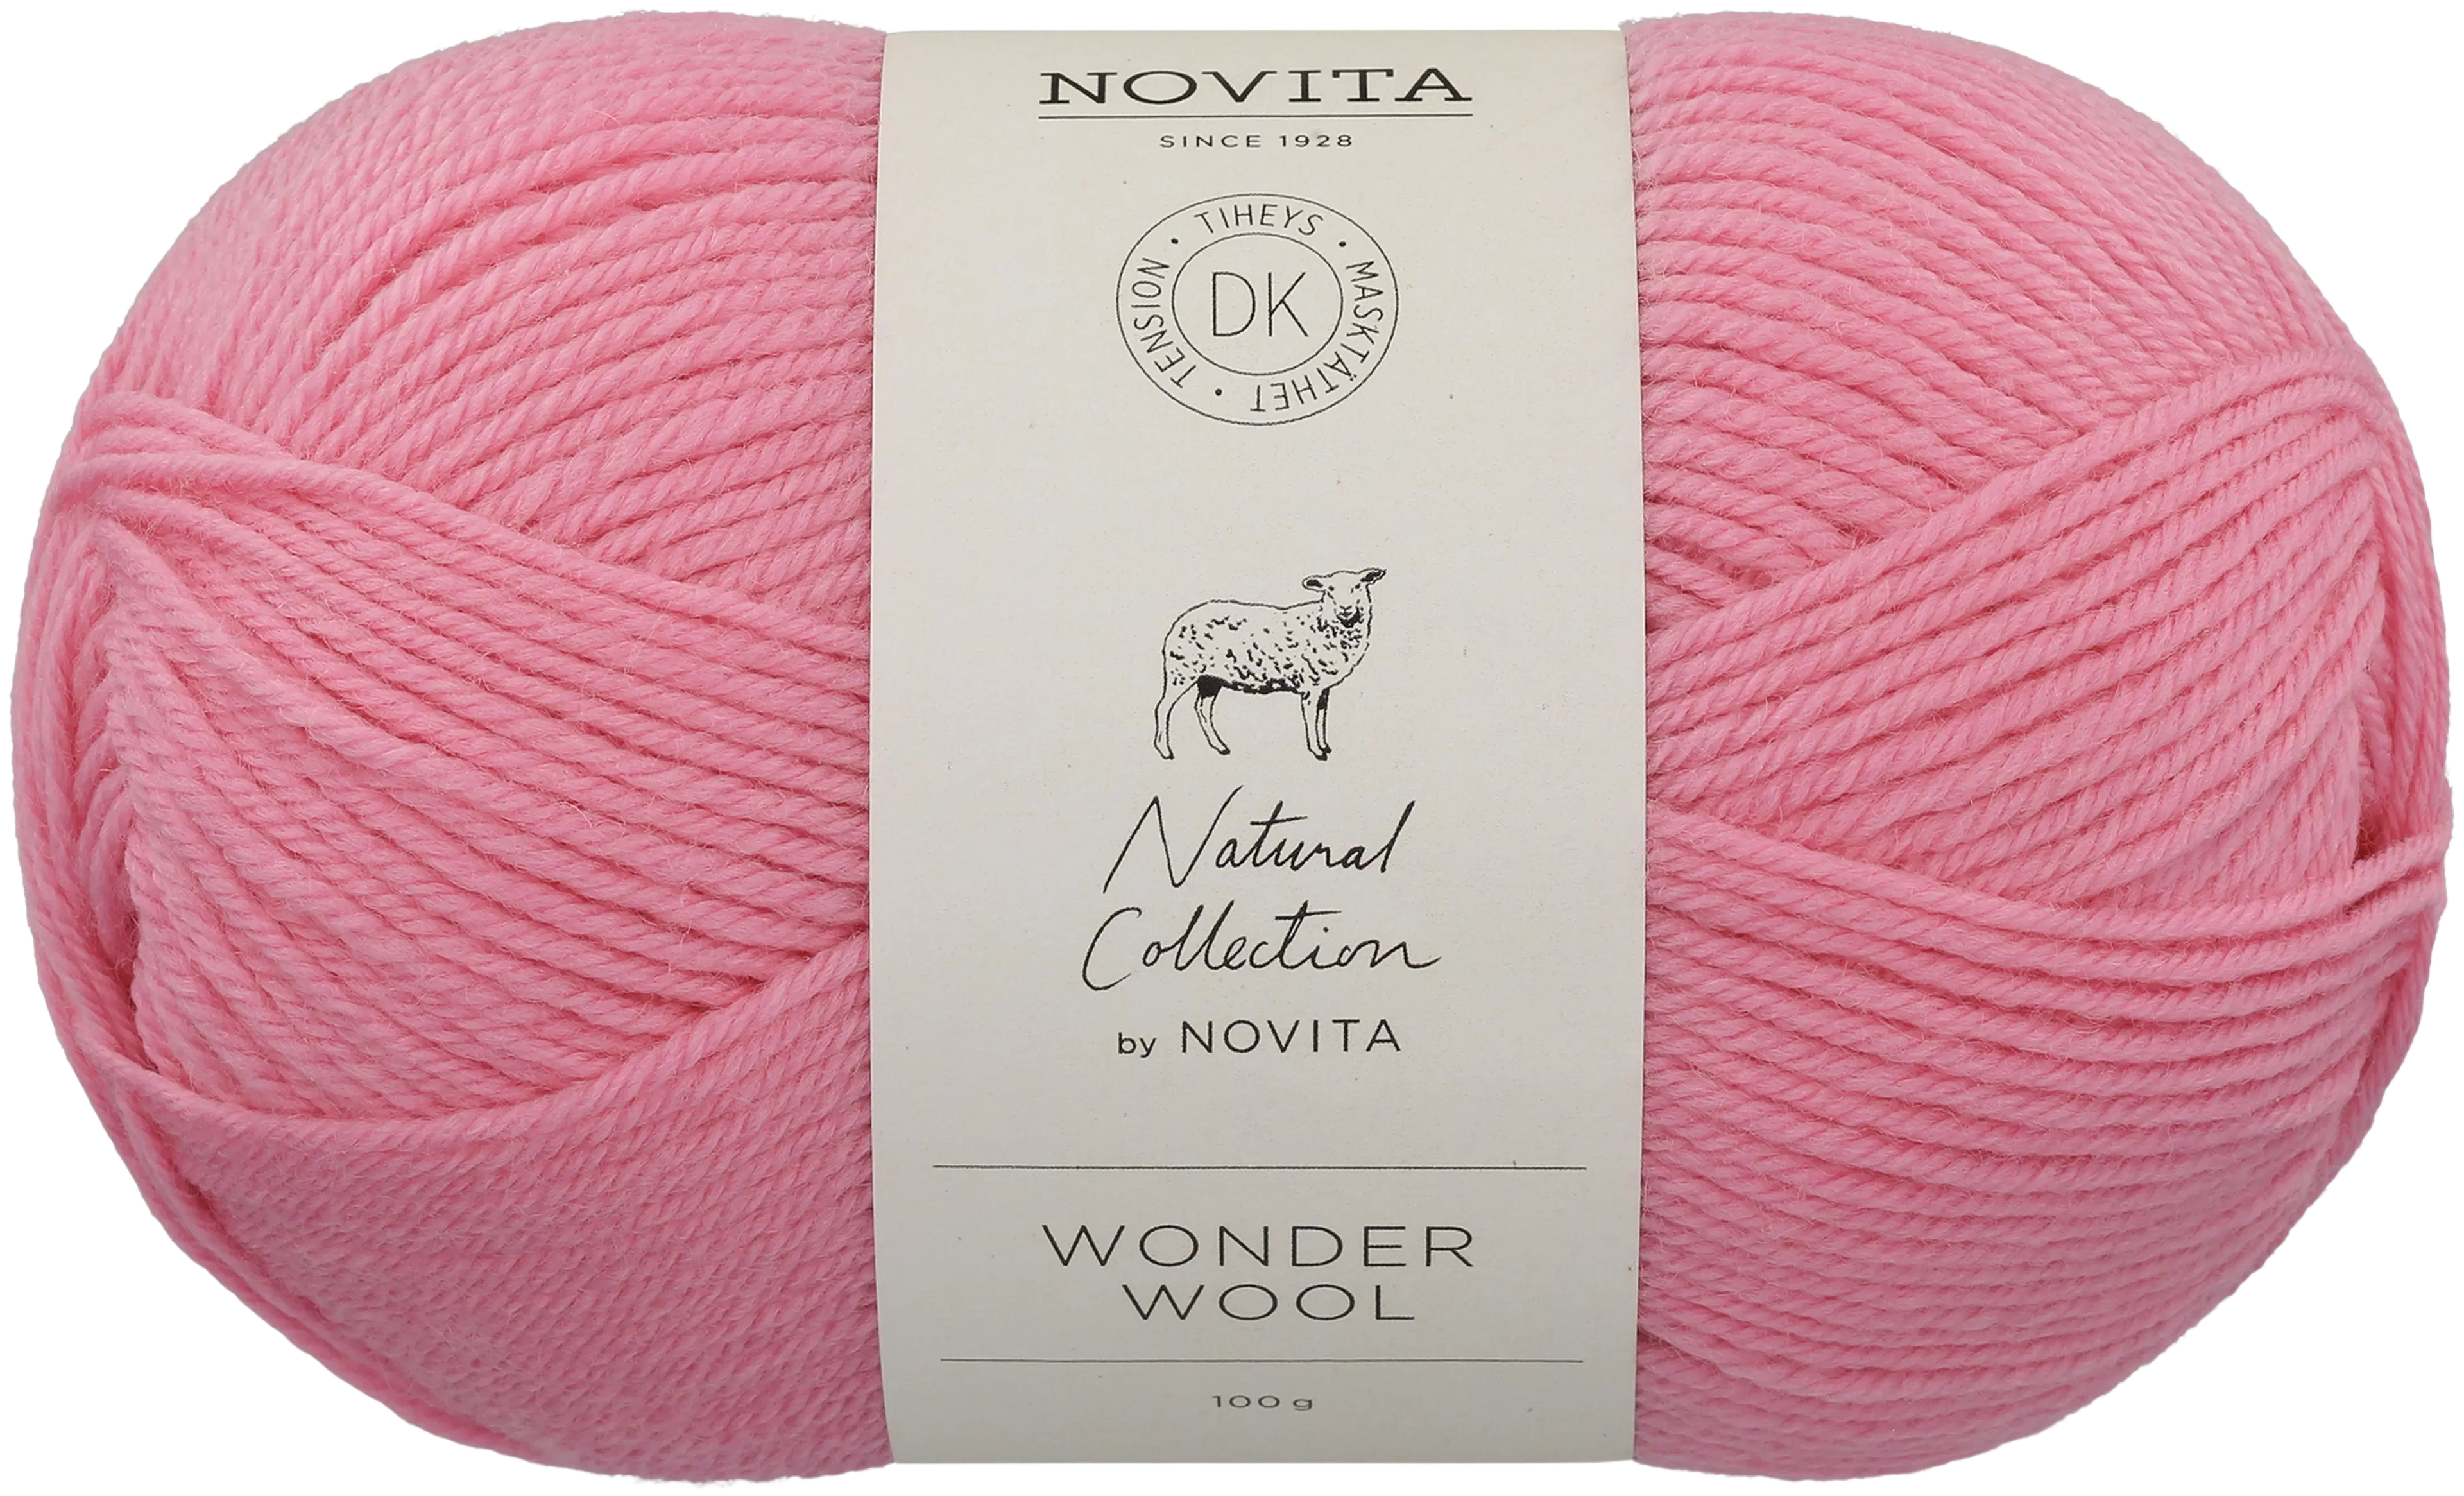 Novita Lanka Wonder Wool DK 100 g karamelli 510